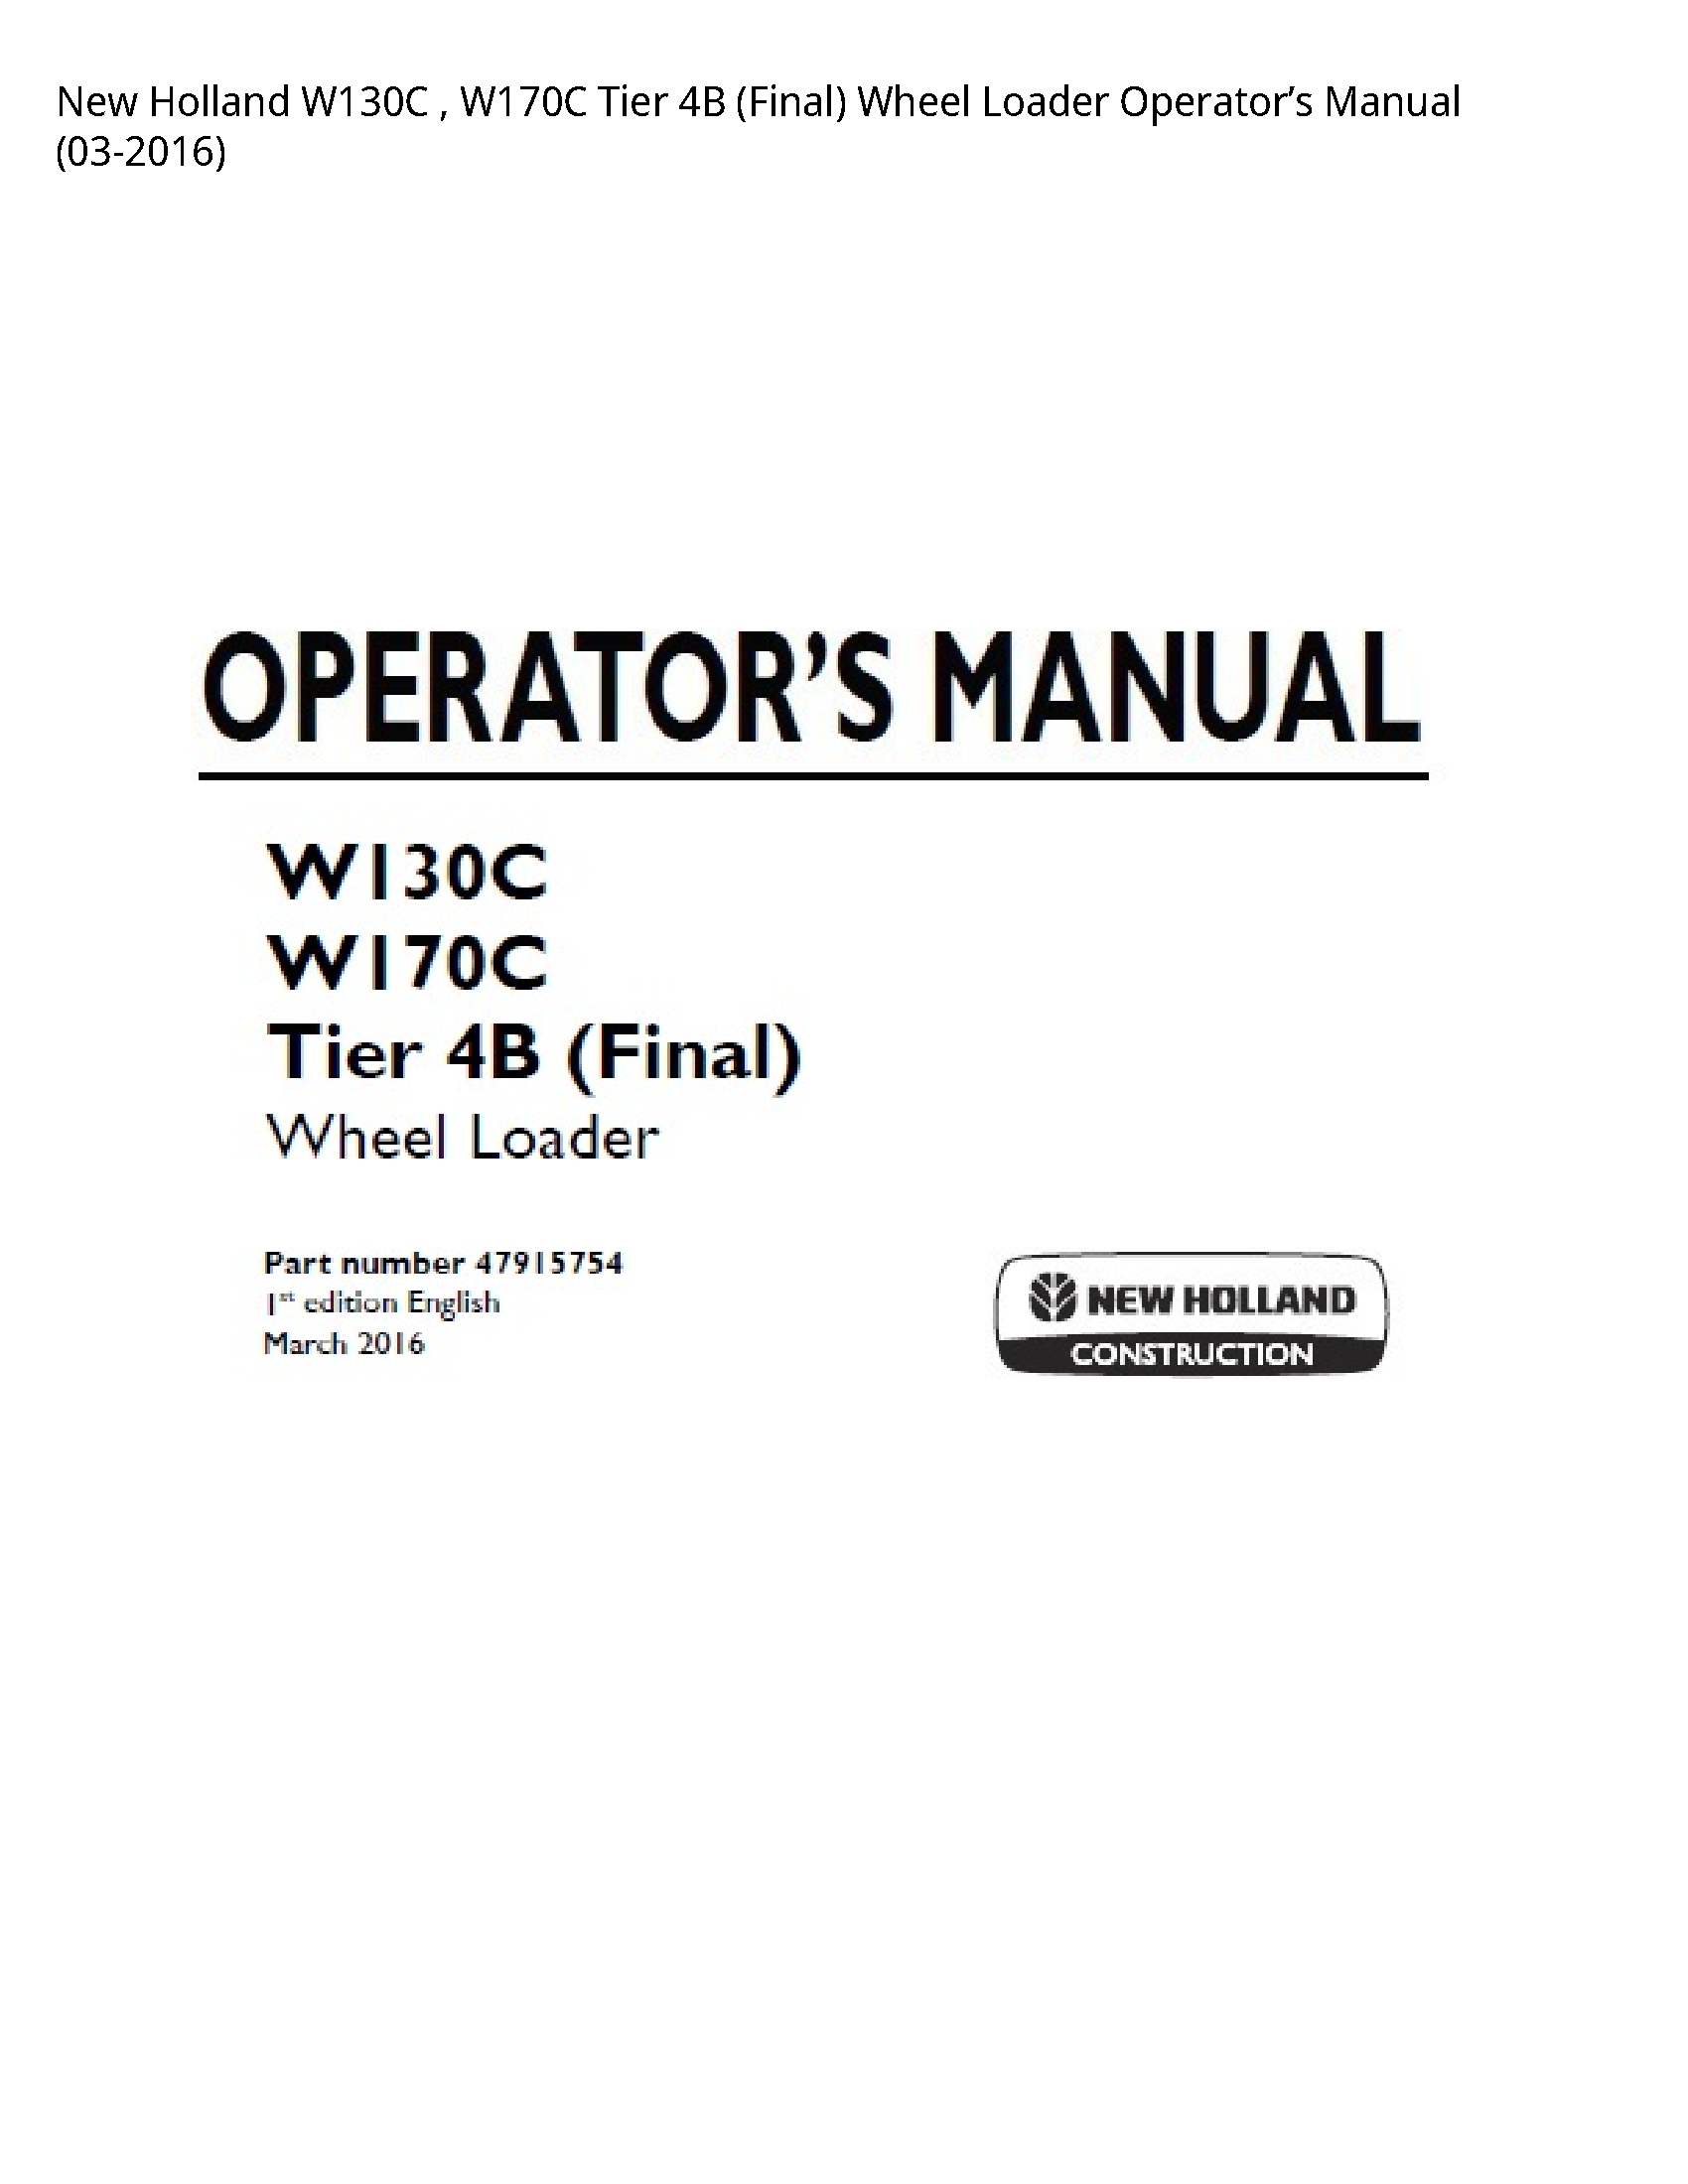 New Holland W130C Tier (Final) Wheel Loader Operator’s manual